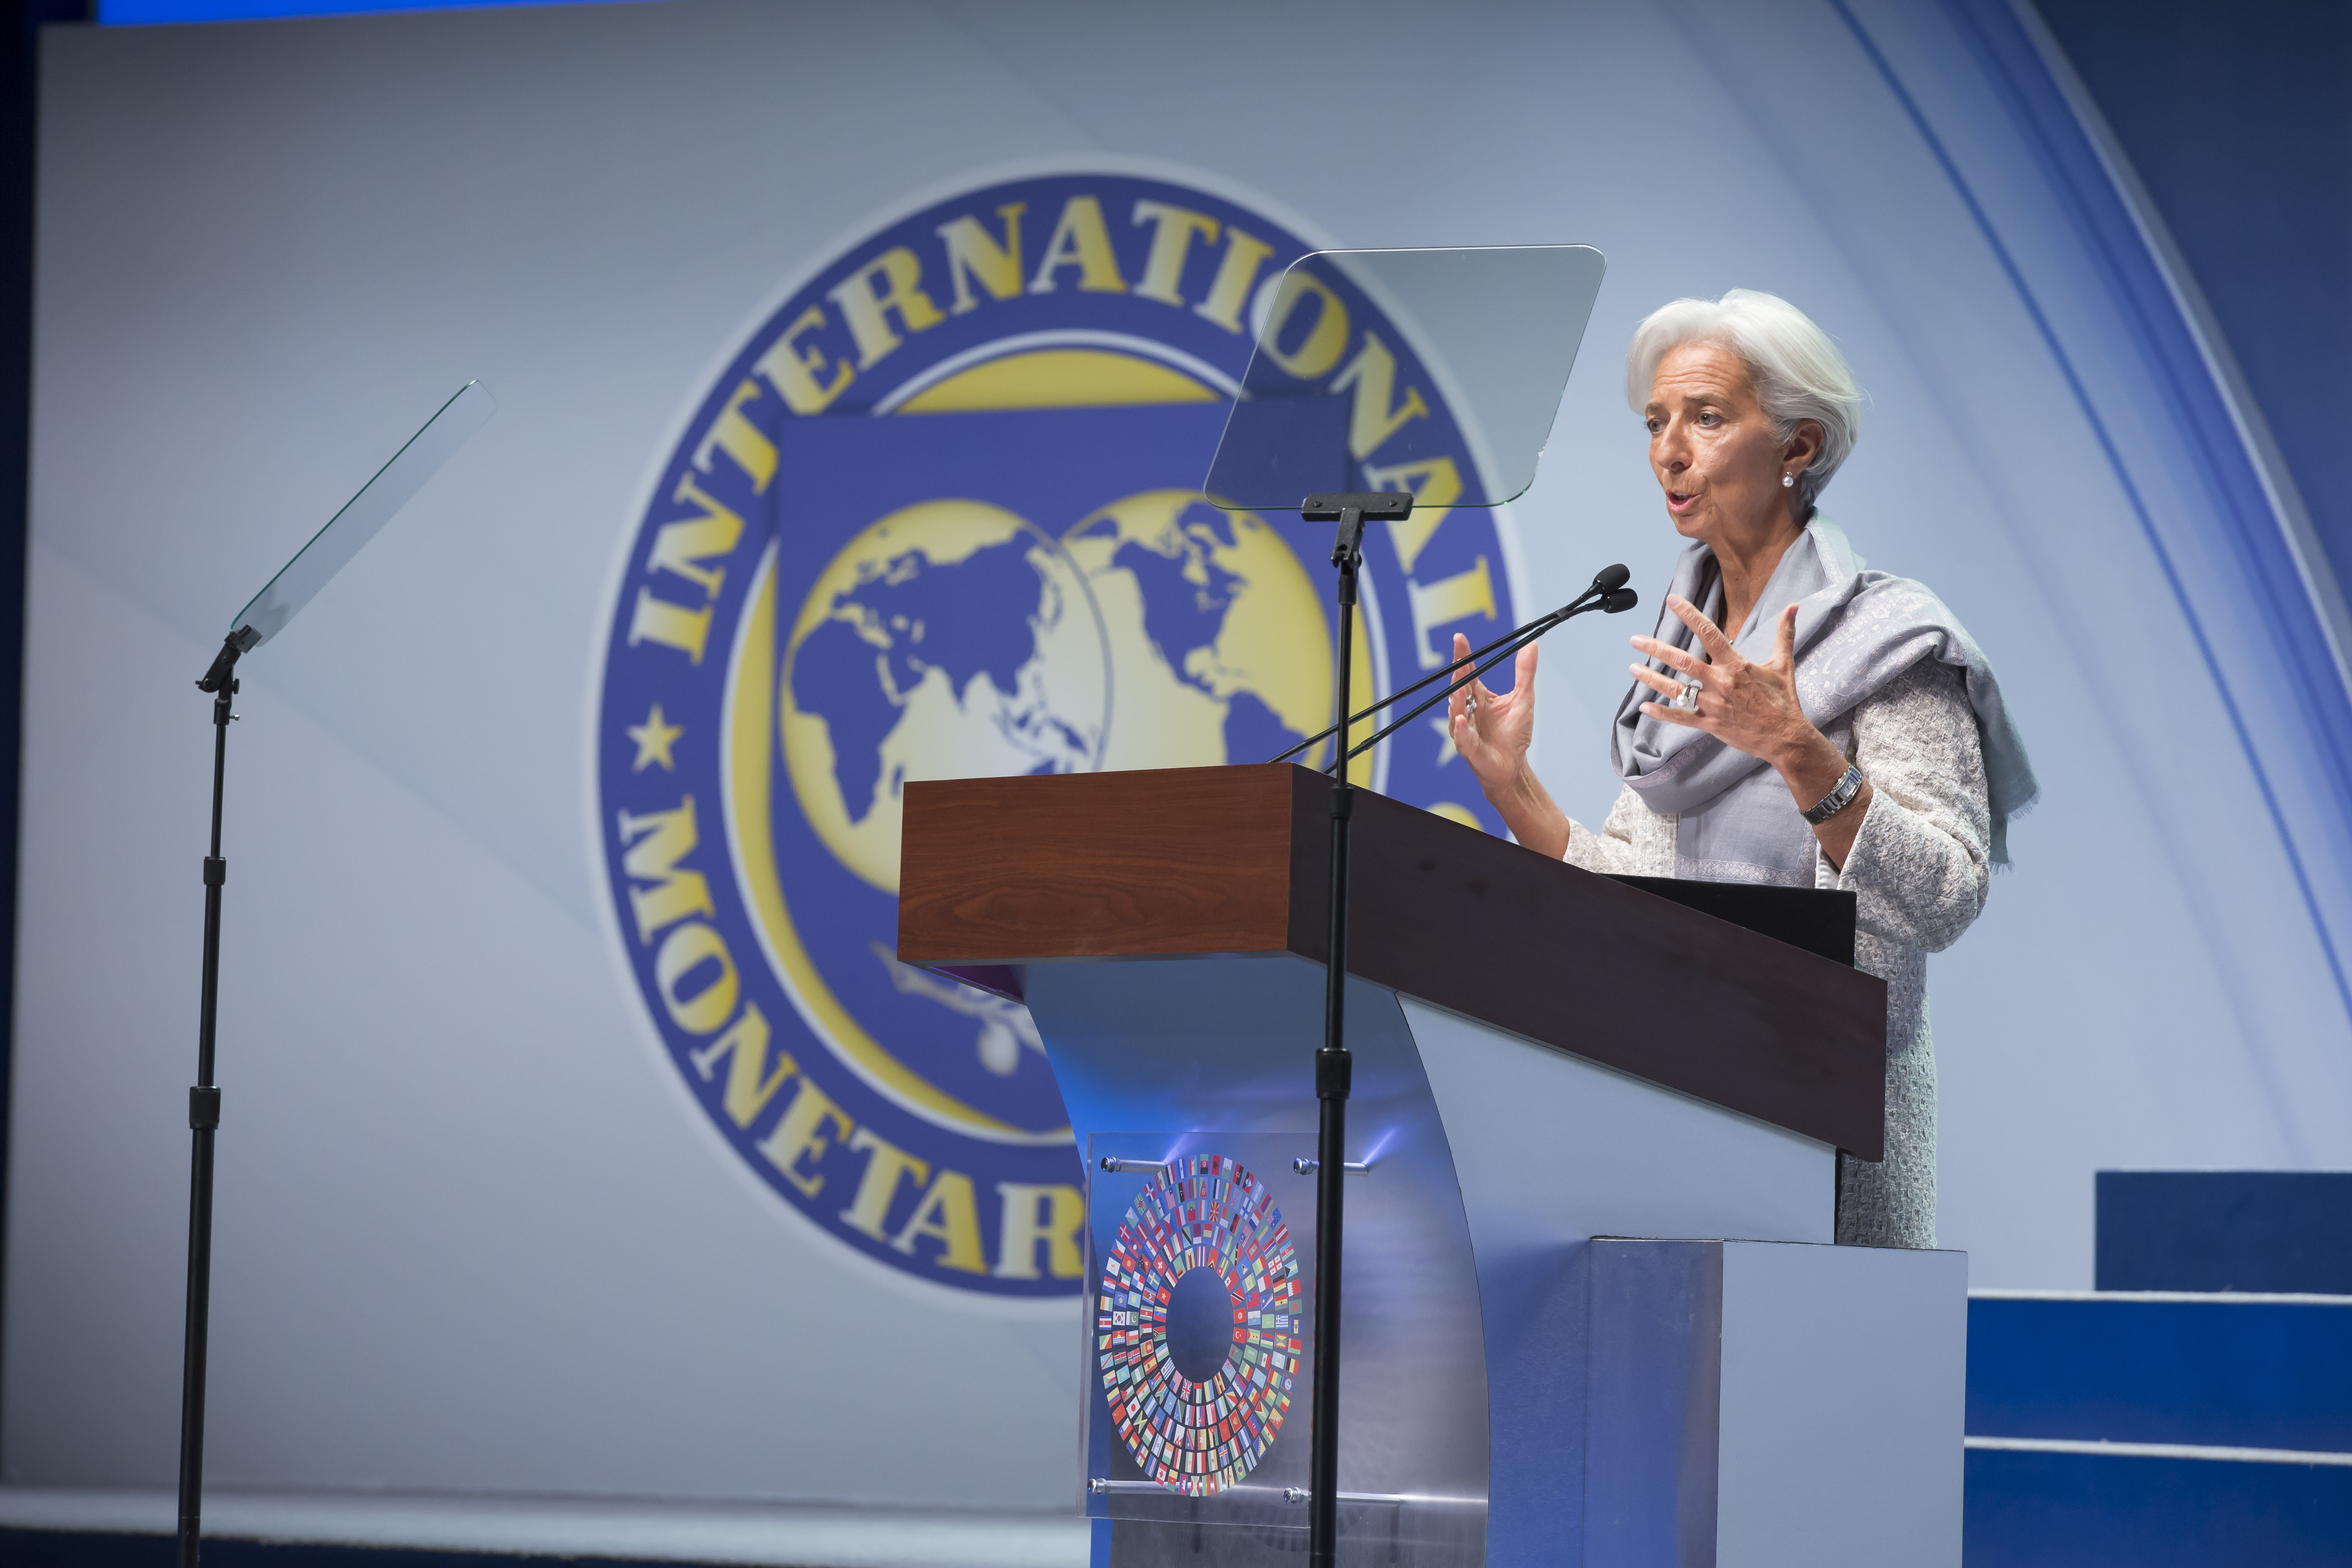 Мвф валюта. Международный валютный фонд (МВФ). МВФ Вашингтон. Кристин Лагард сотрудники МВФ. Международный валютный фонд штаб квартира.